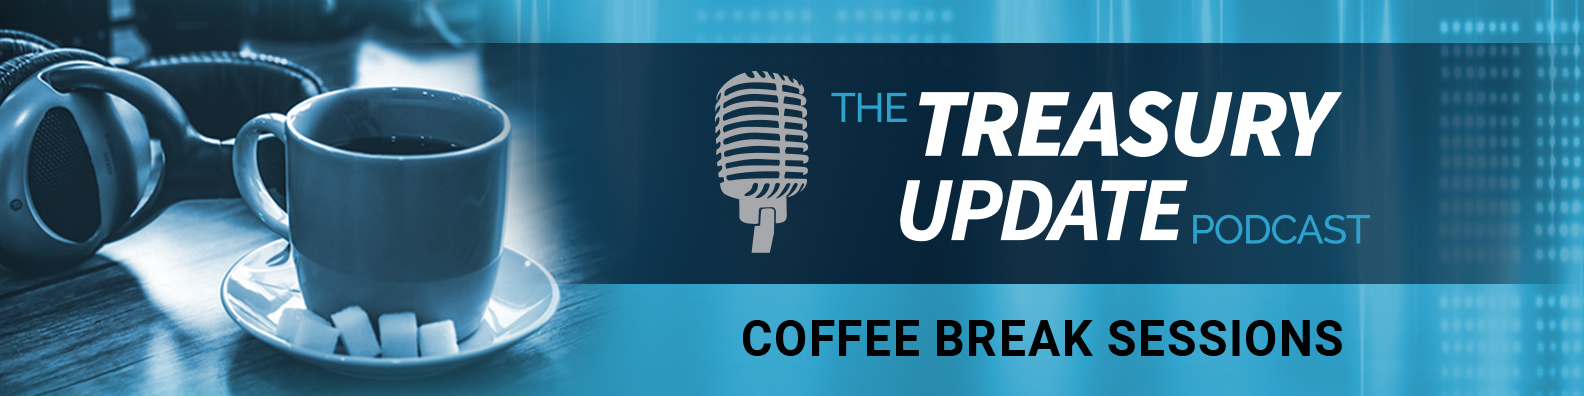 Coffee Break Sessions - Treasury Update Podcast